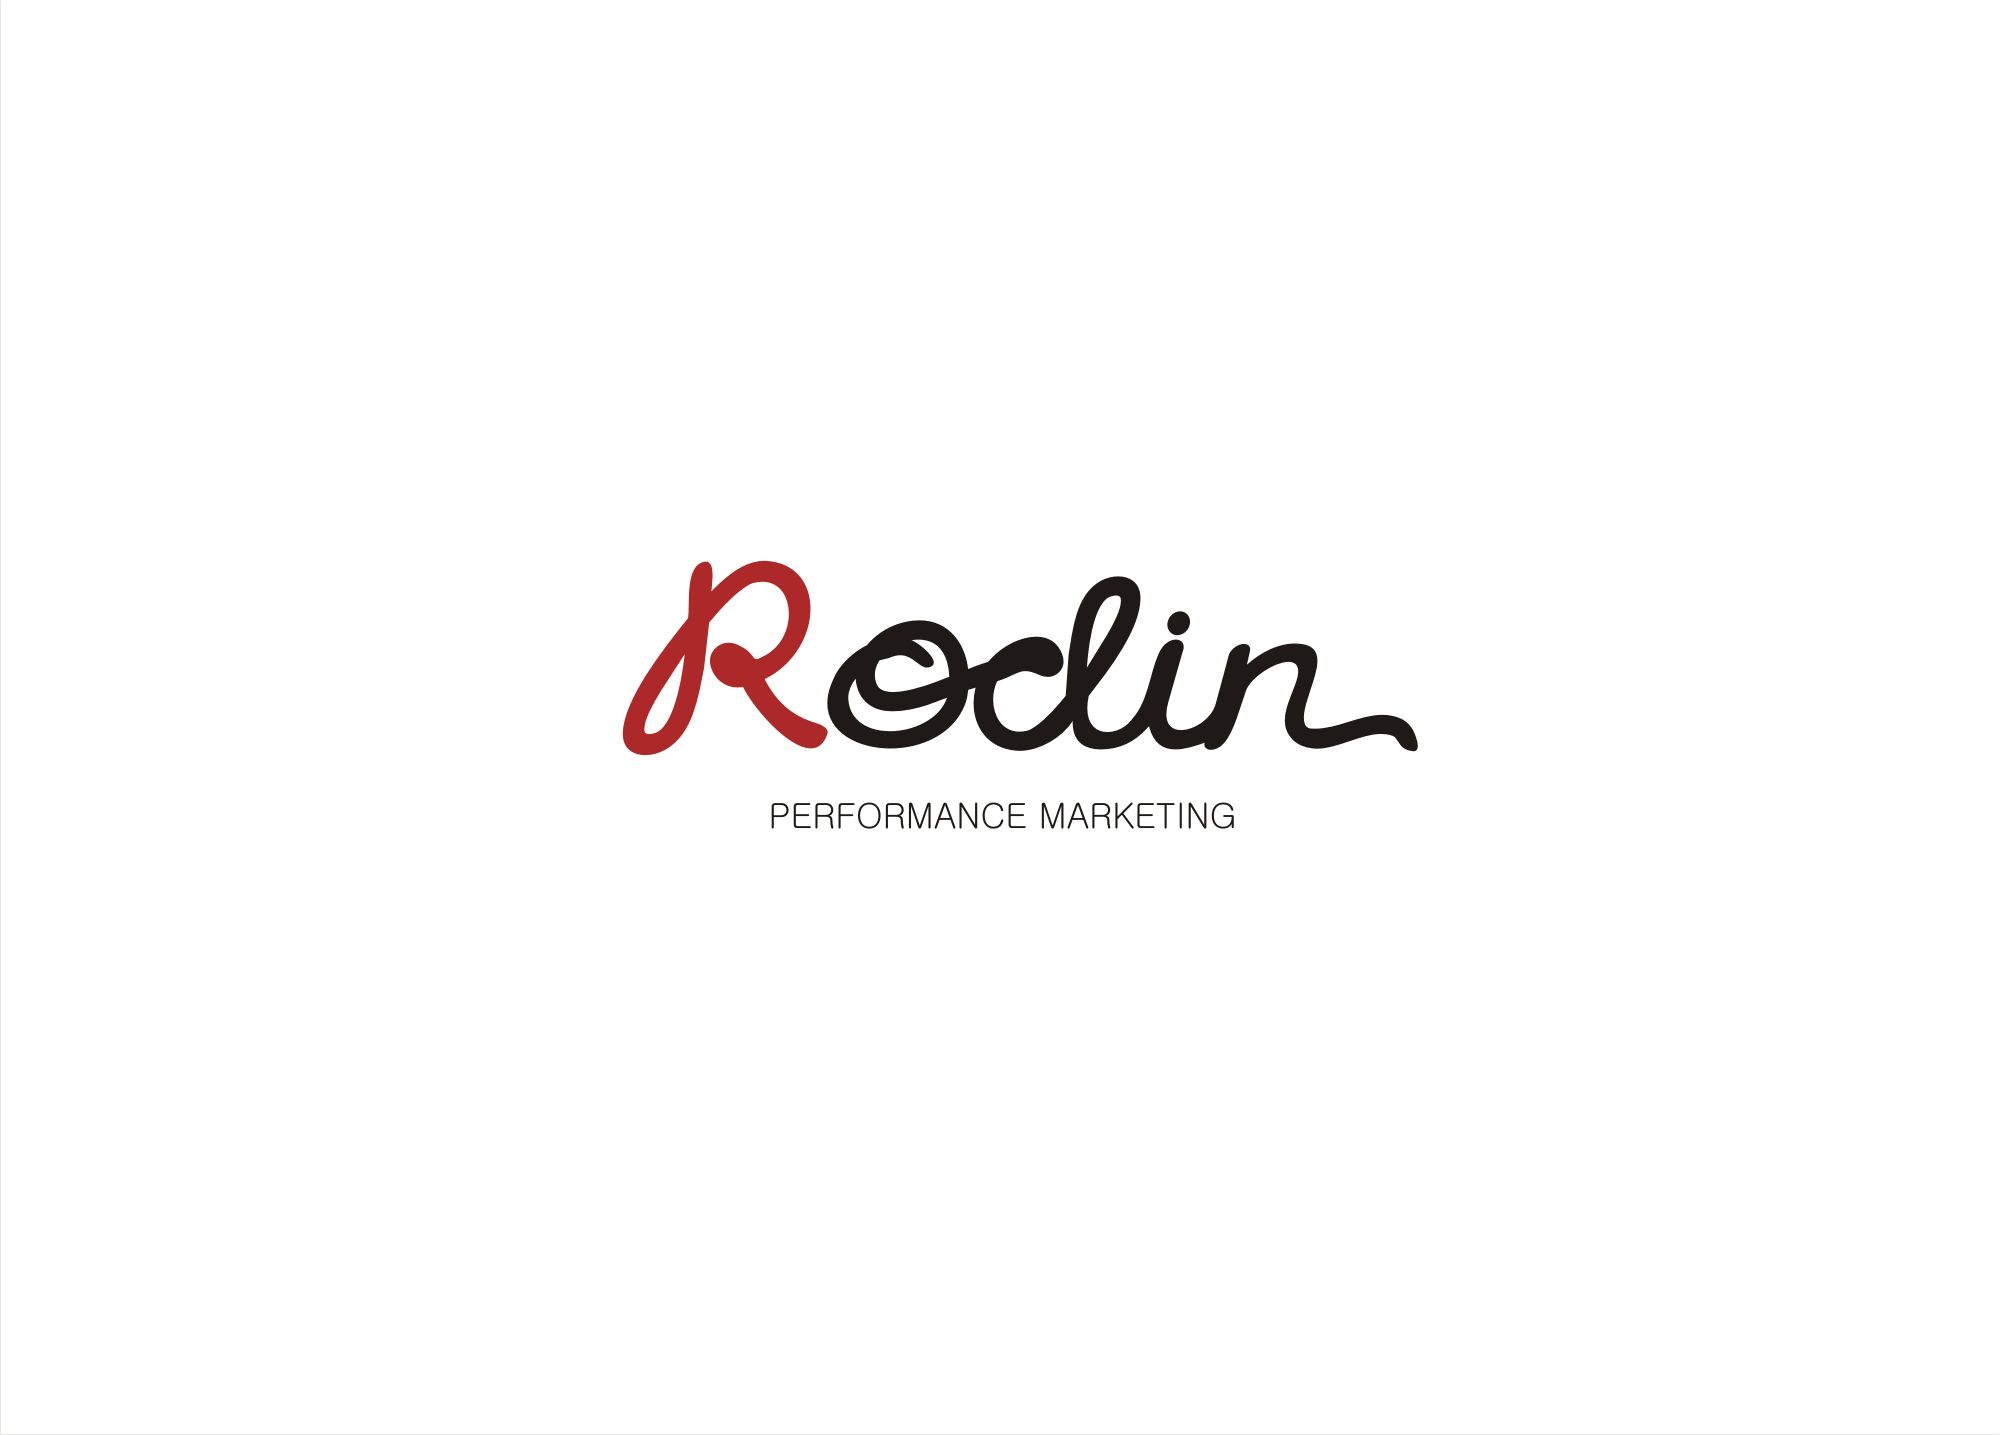 Логотип для RODIN - дизайнер 89638480888